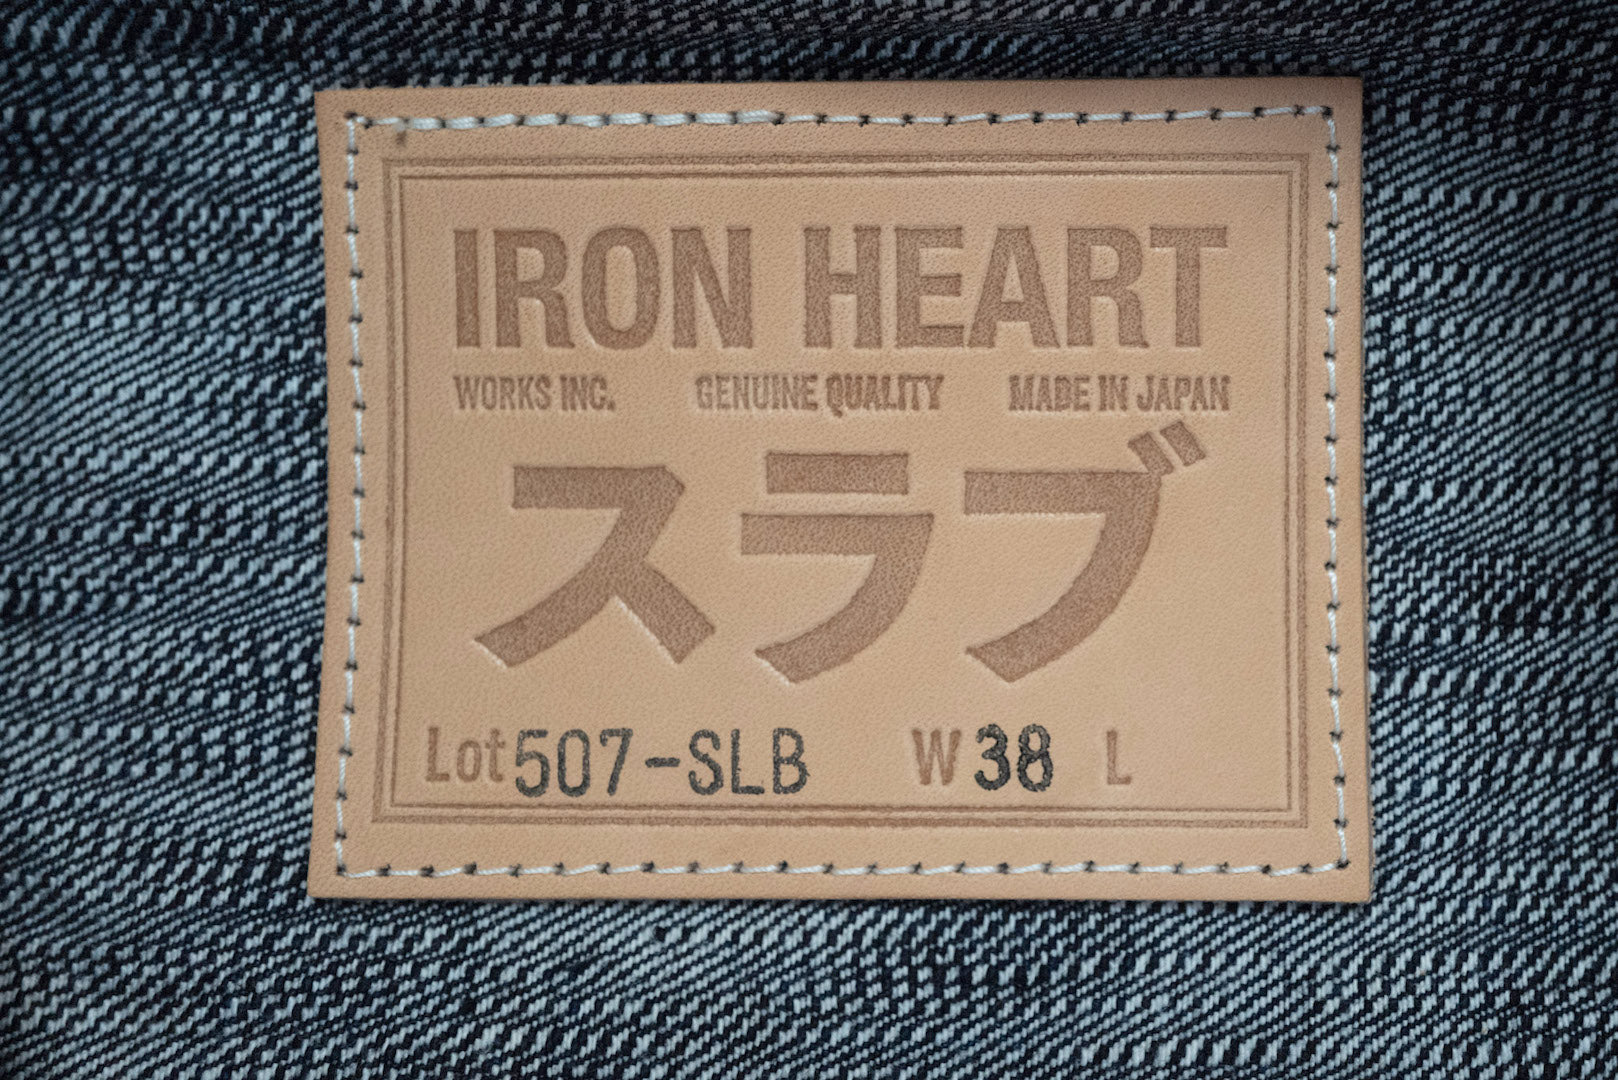 Iron Heart 16oz Slubby Type 2 Denim Jacket